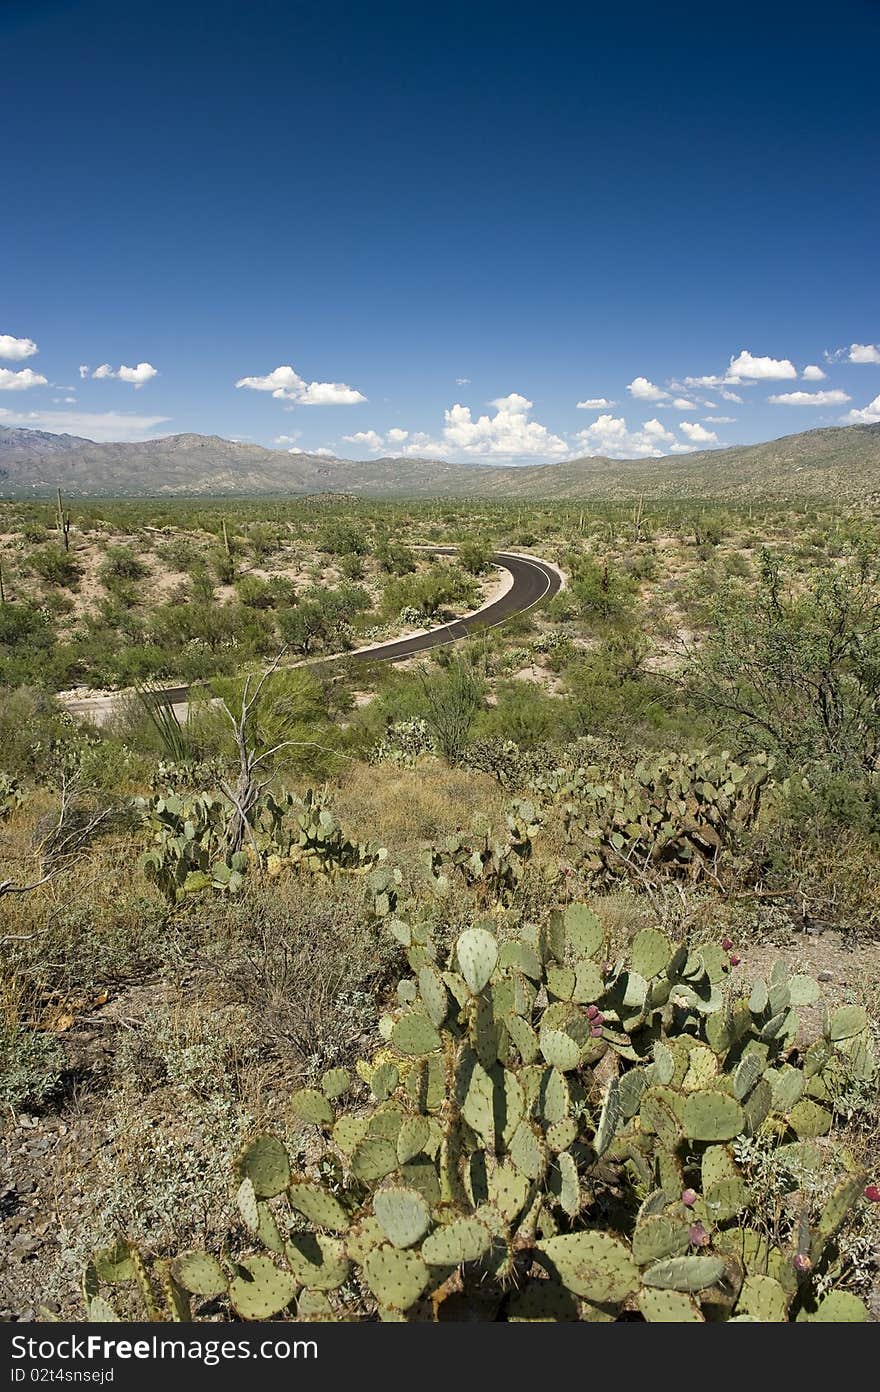 Fields of cacti in the Sonoran Desert. Fields of cacti in the Sonoran Desert